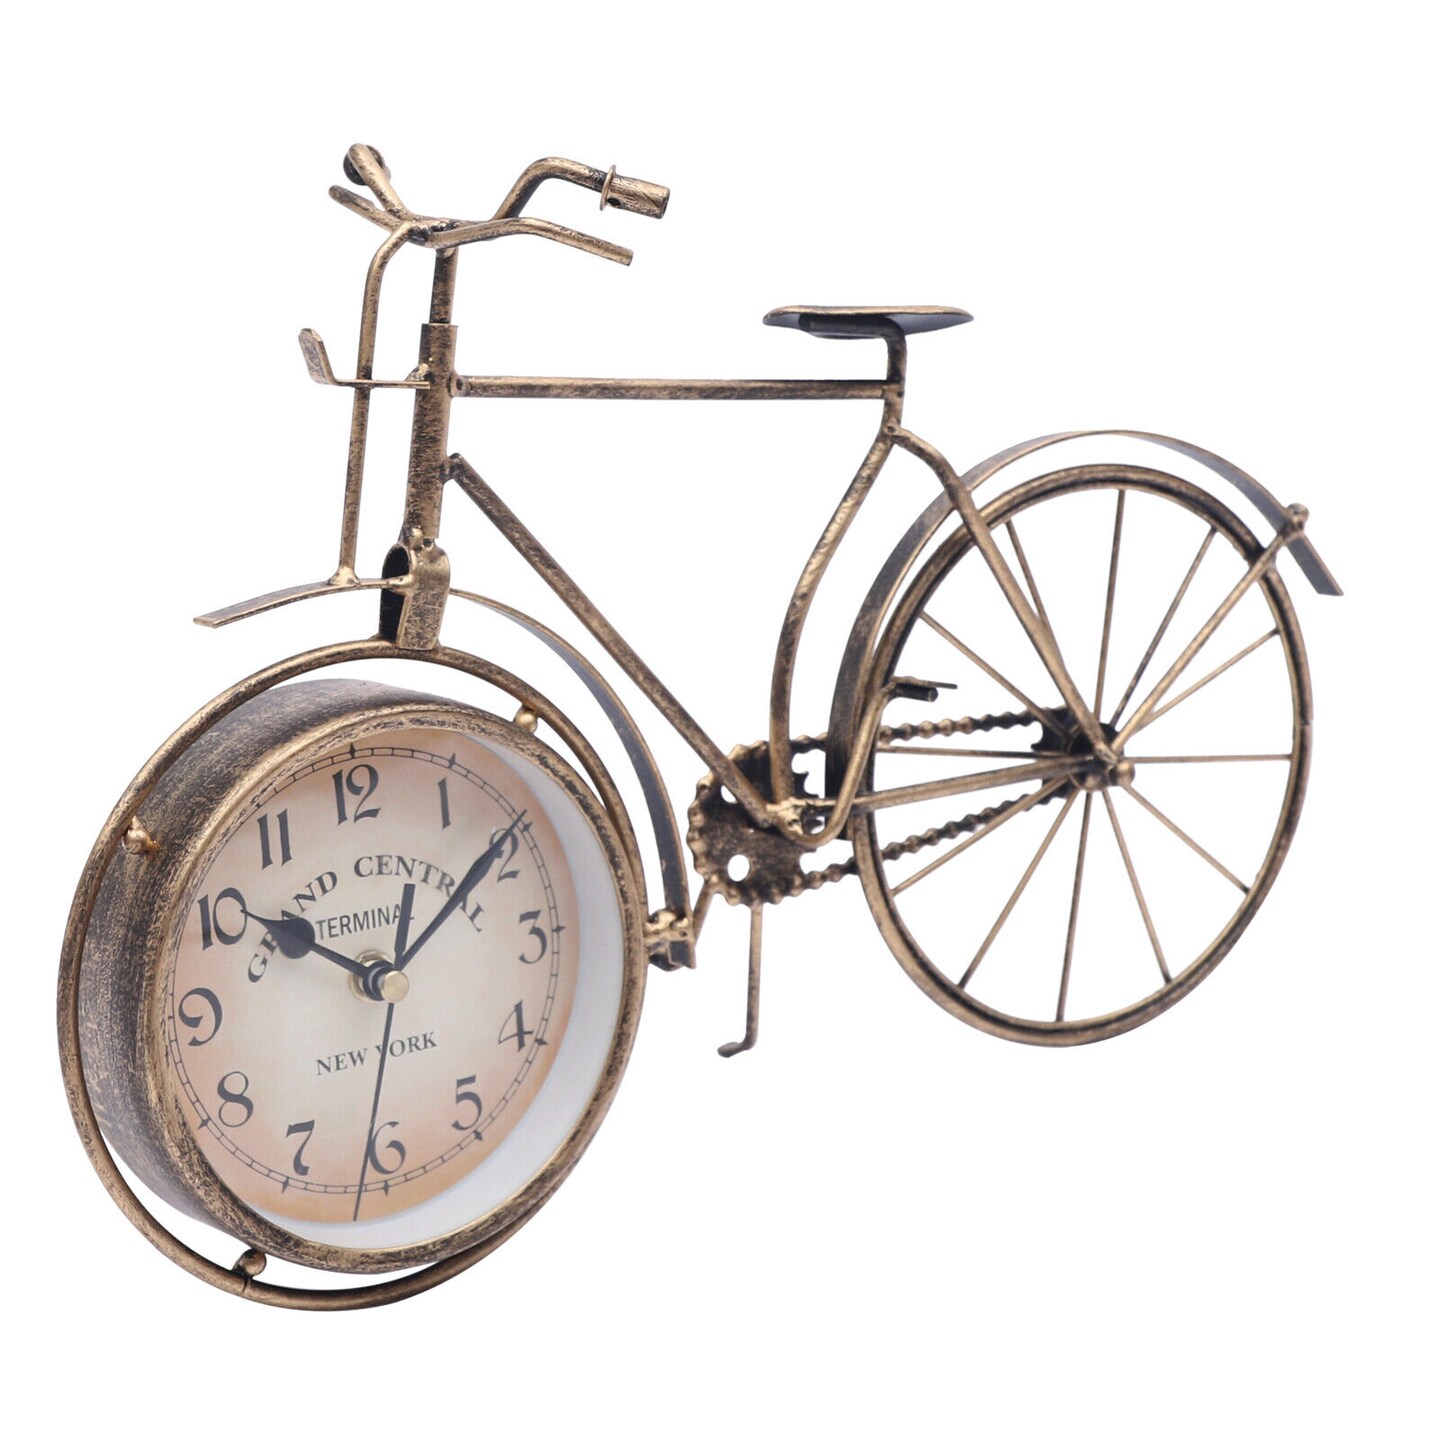 Kitcheniva Vintage Bronze Metal Bicycle Table Clock Decor